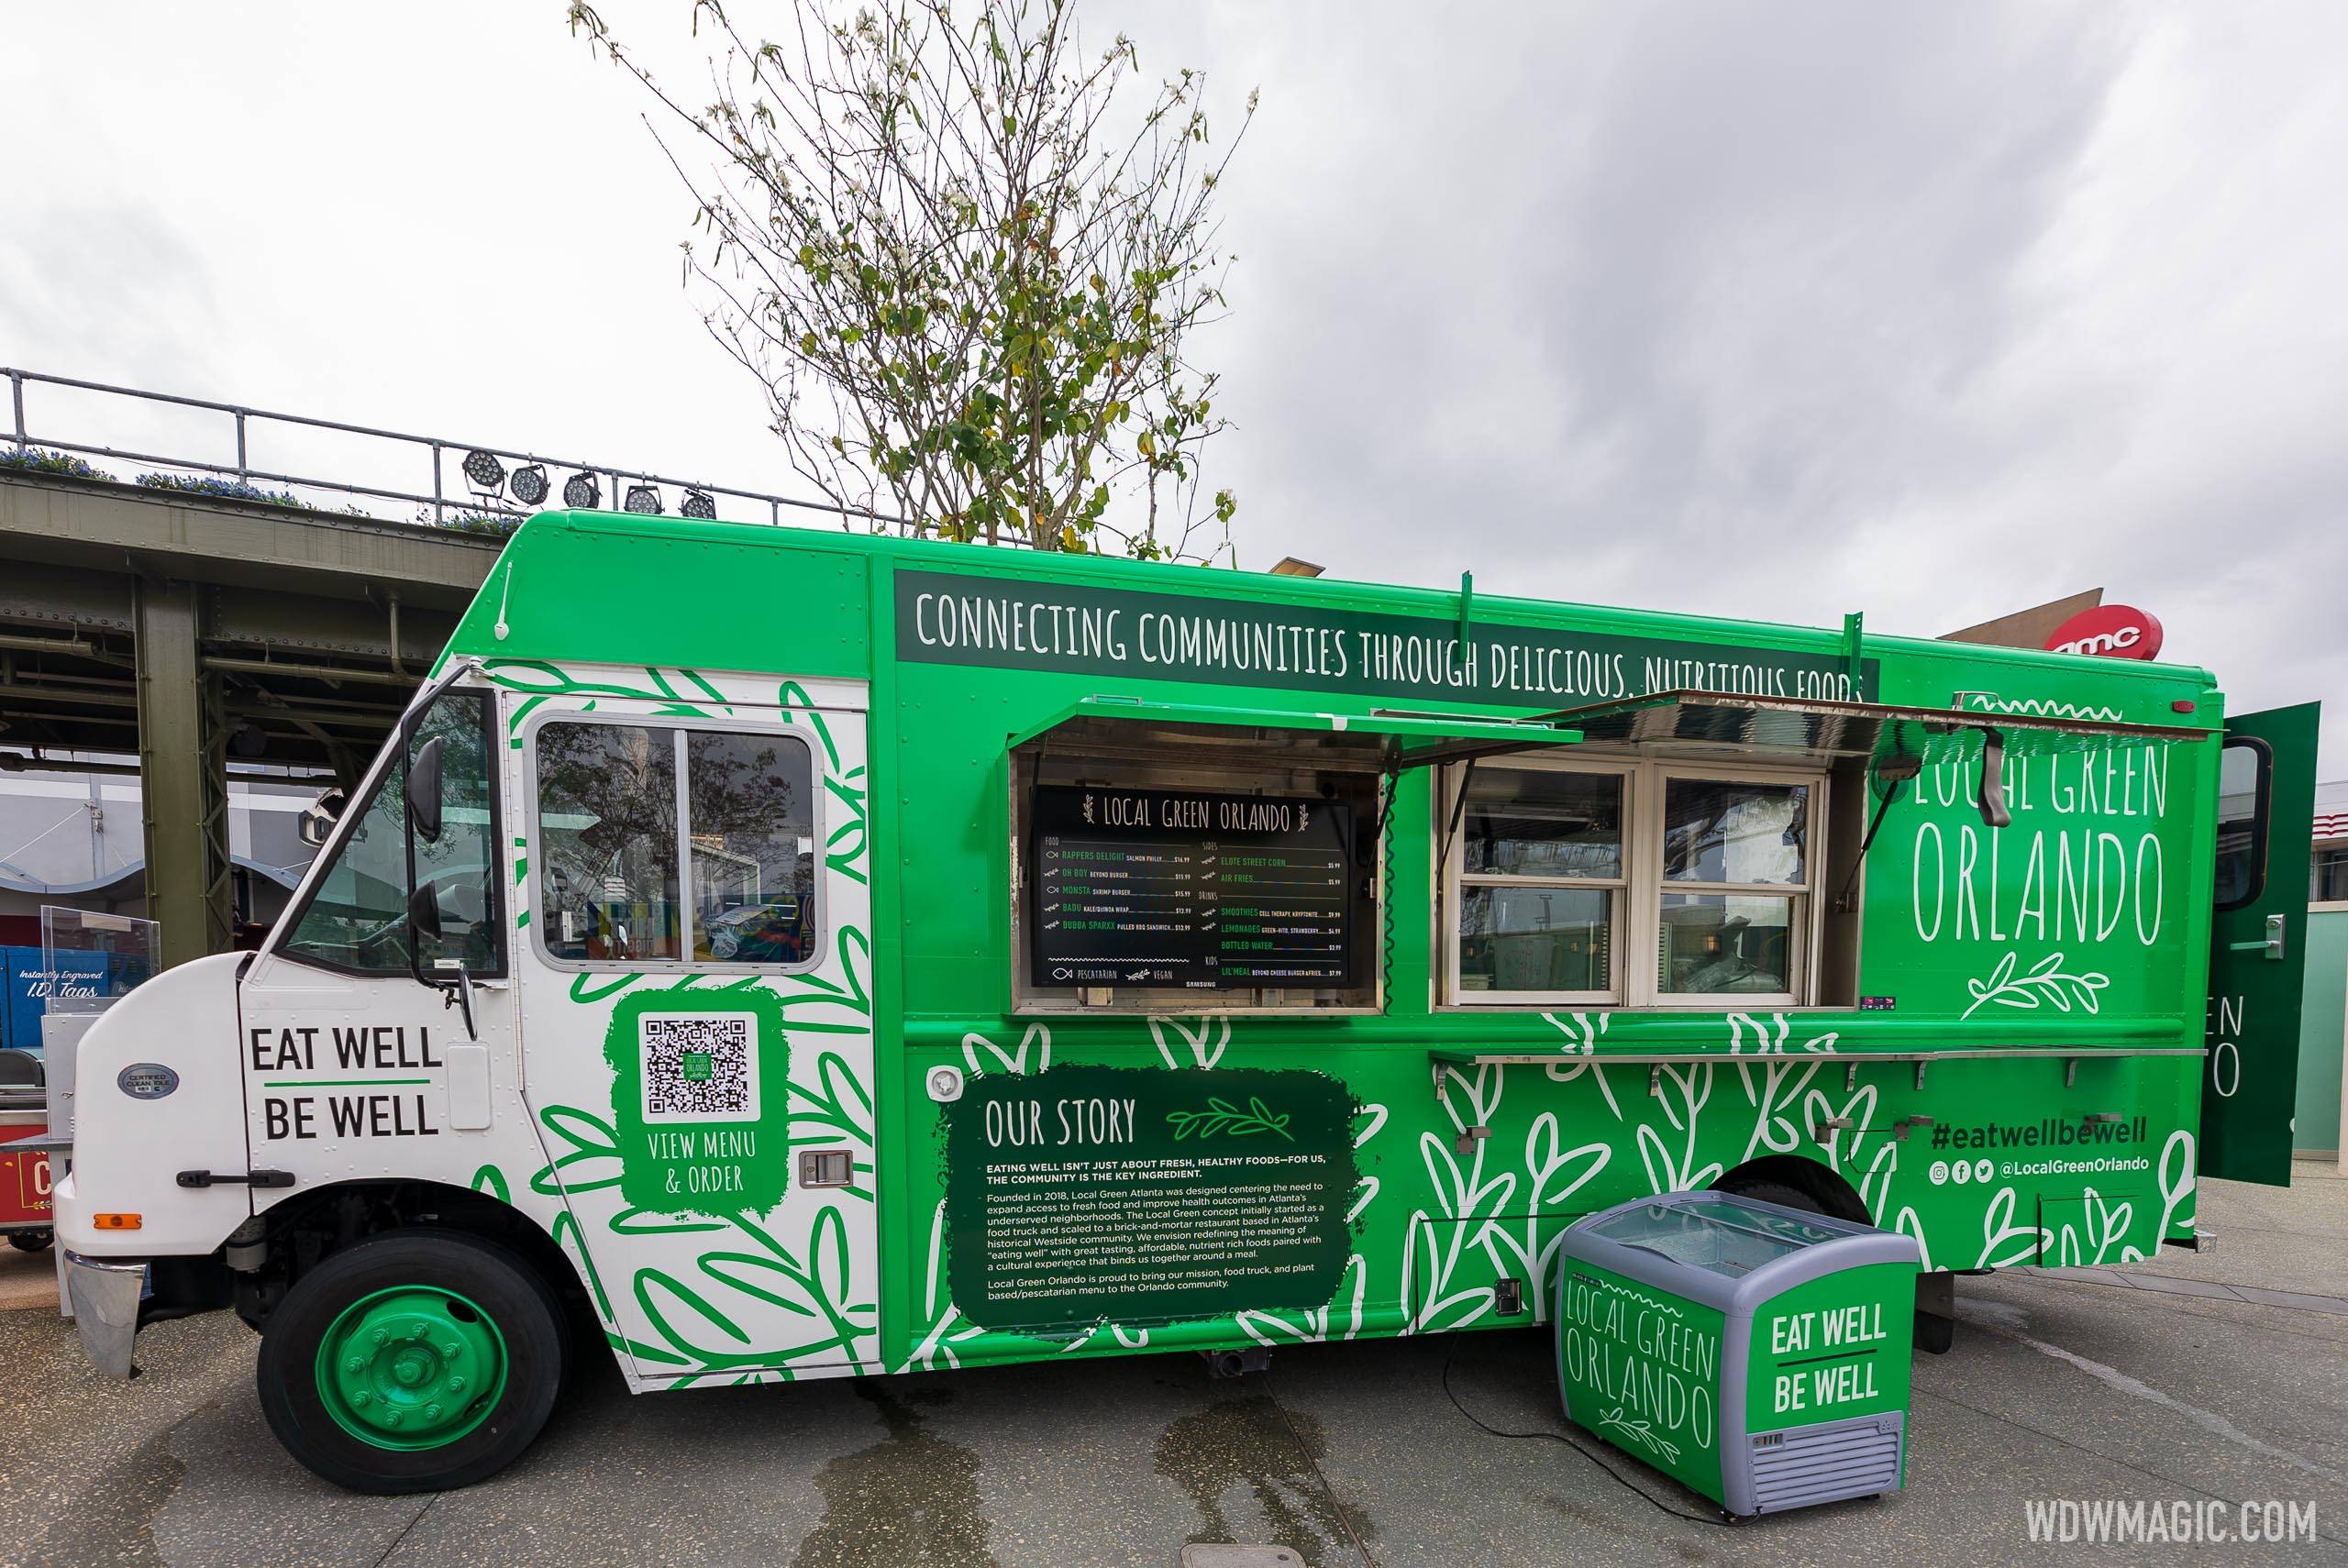 Local Green Orlando food truck arrives at Disney Springs